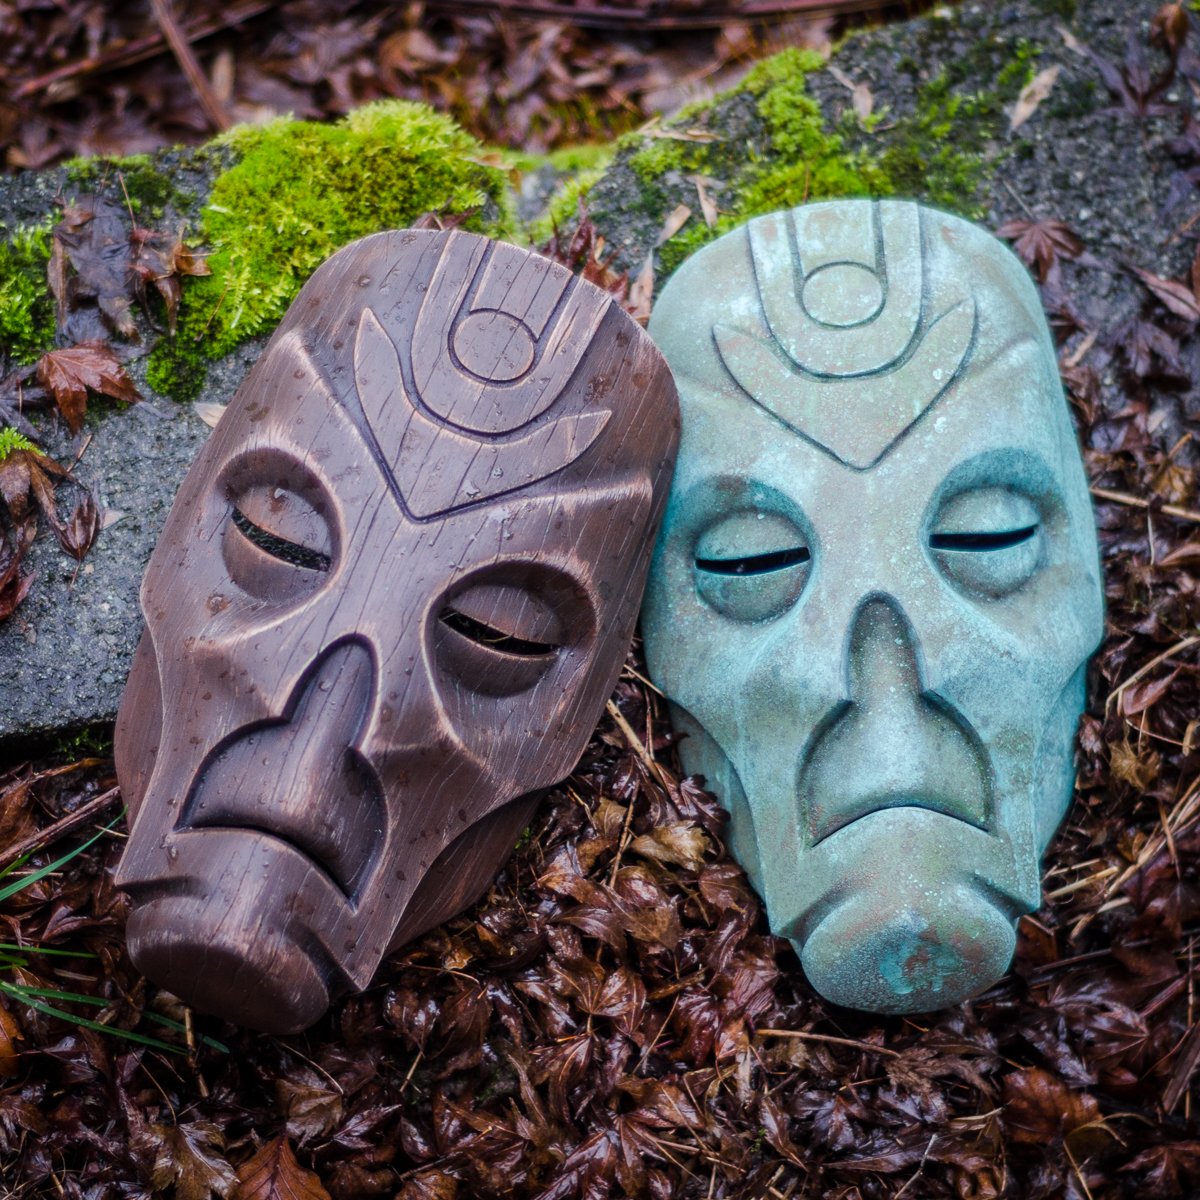 Bill Doran on Twitter: "Completed the Dragon Priest Wooden Mask quest! # skyrim #seattlerain https://t.co/l8u1EQ4T1Z" / Twitter